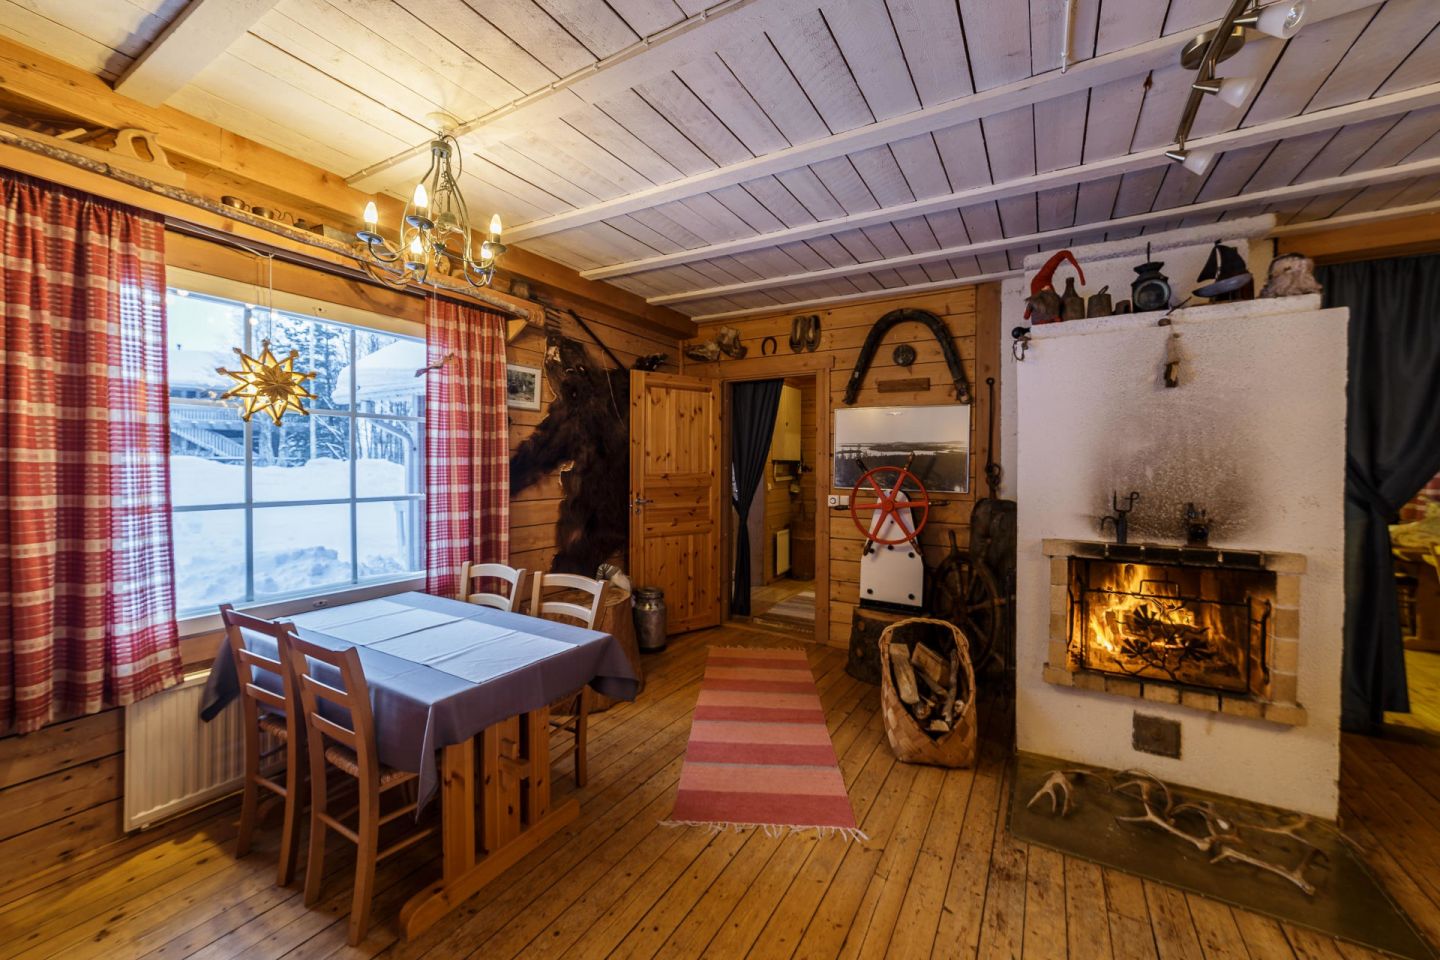 Hotel Uitoniemi in Kemijärvi, Finland, a special summer accommodation in Lapland